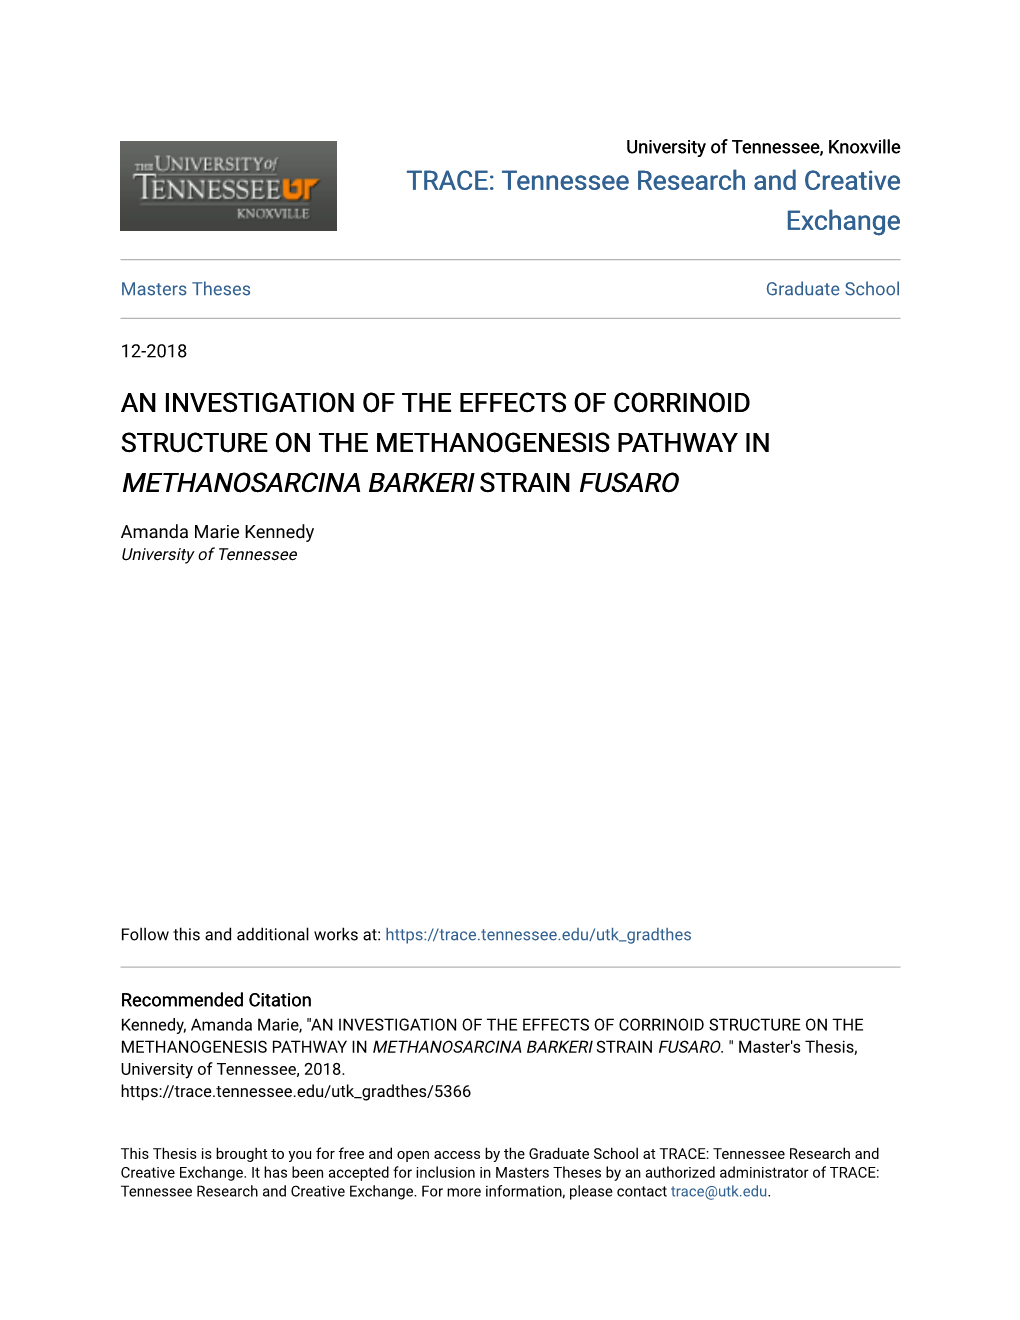 An Investigation of the Effects of Corrinoid Structure on the Methanogenesis Pathway in Methanosarcina Barkeri Strain Fusaro